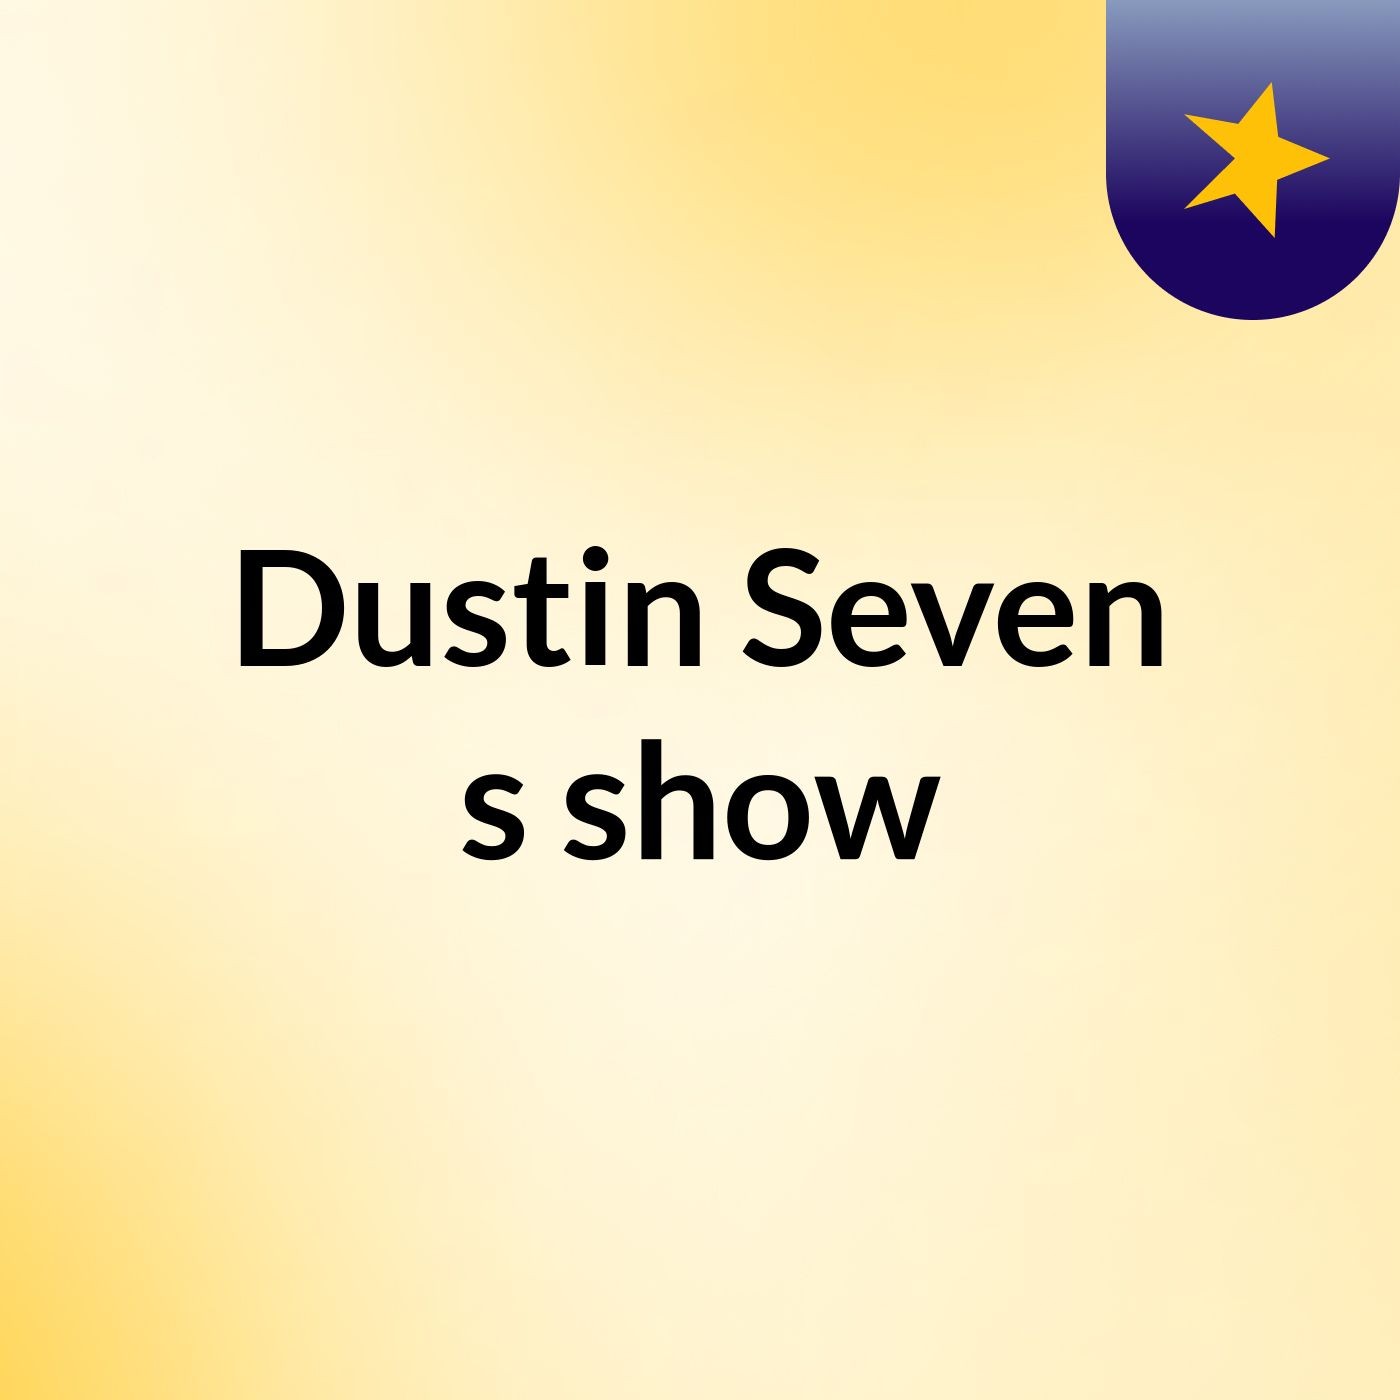 Dustin Seven's show